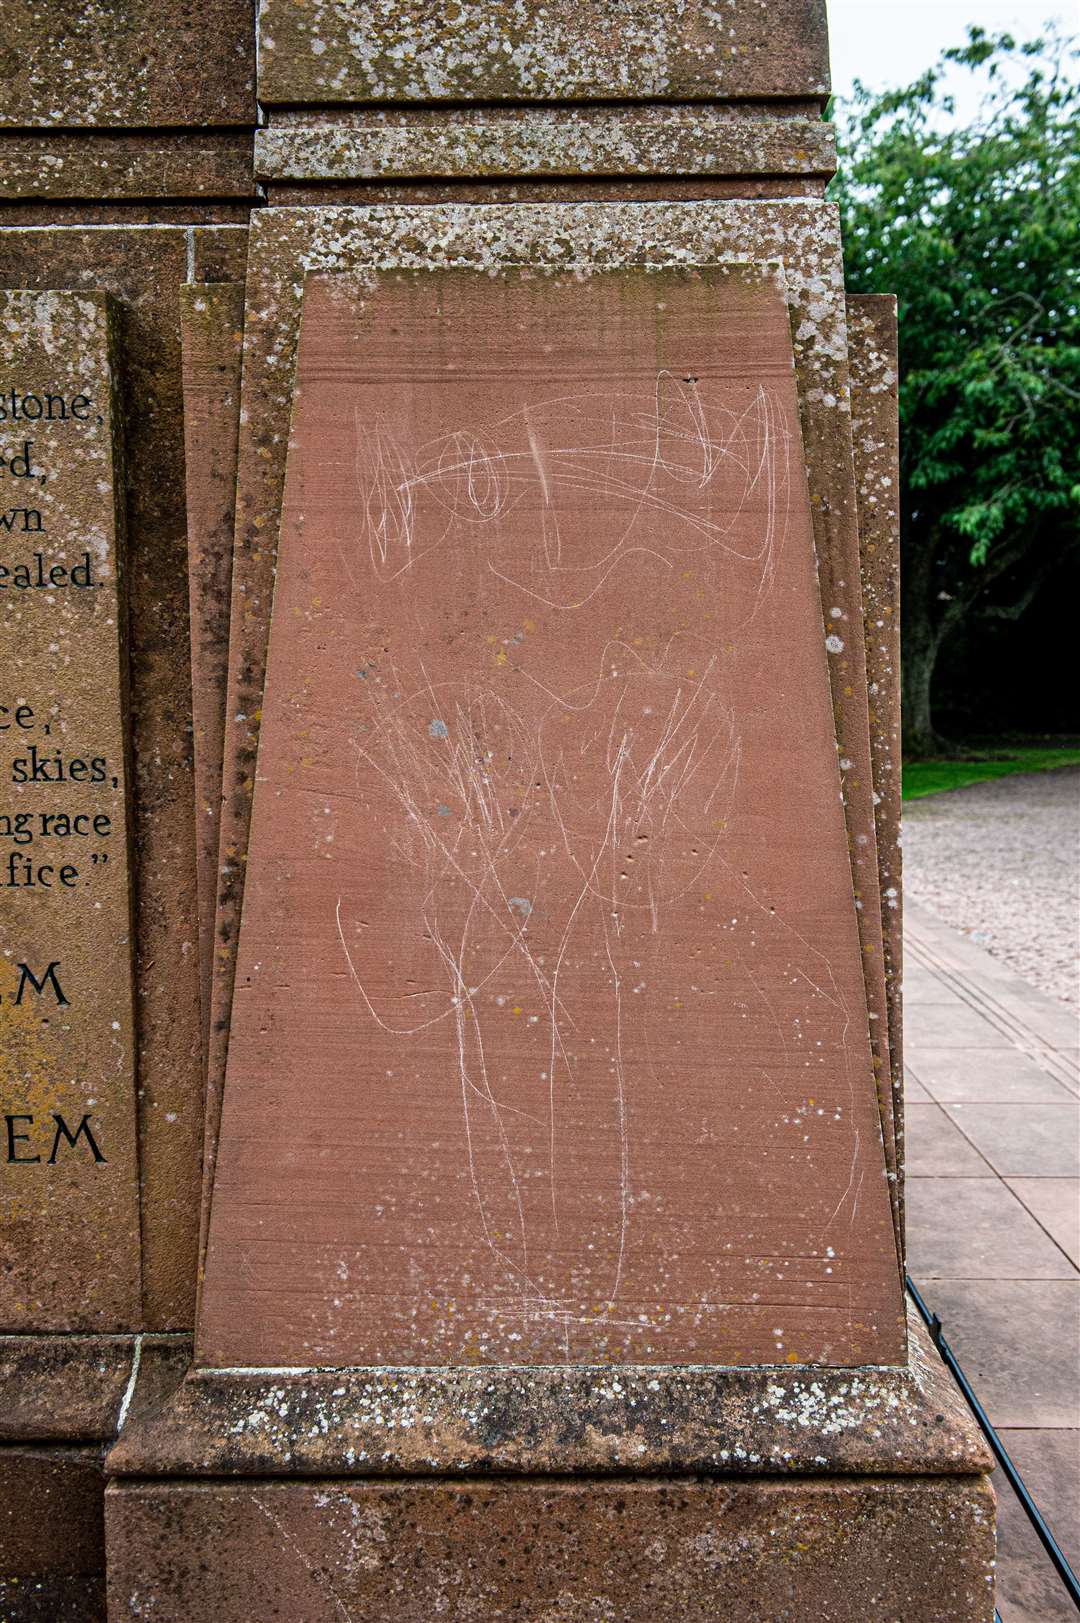 The war memorial has been damaged.